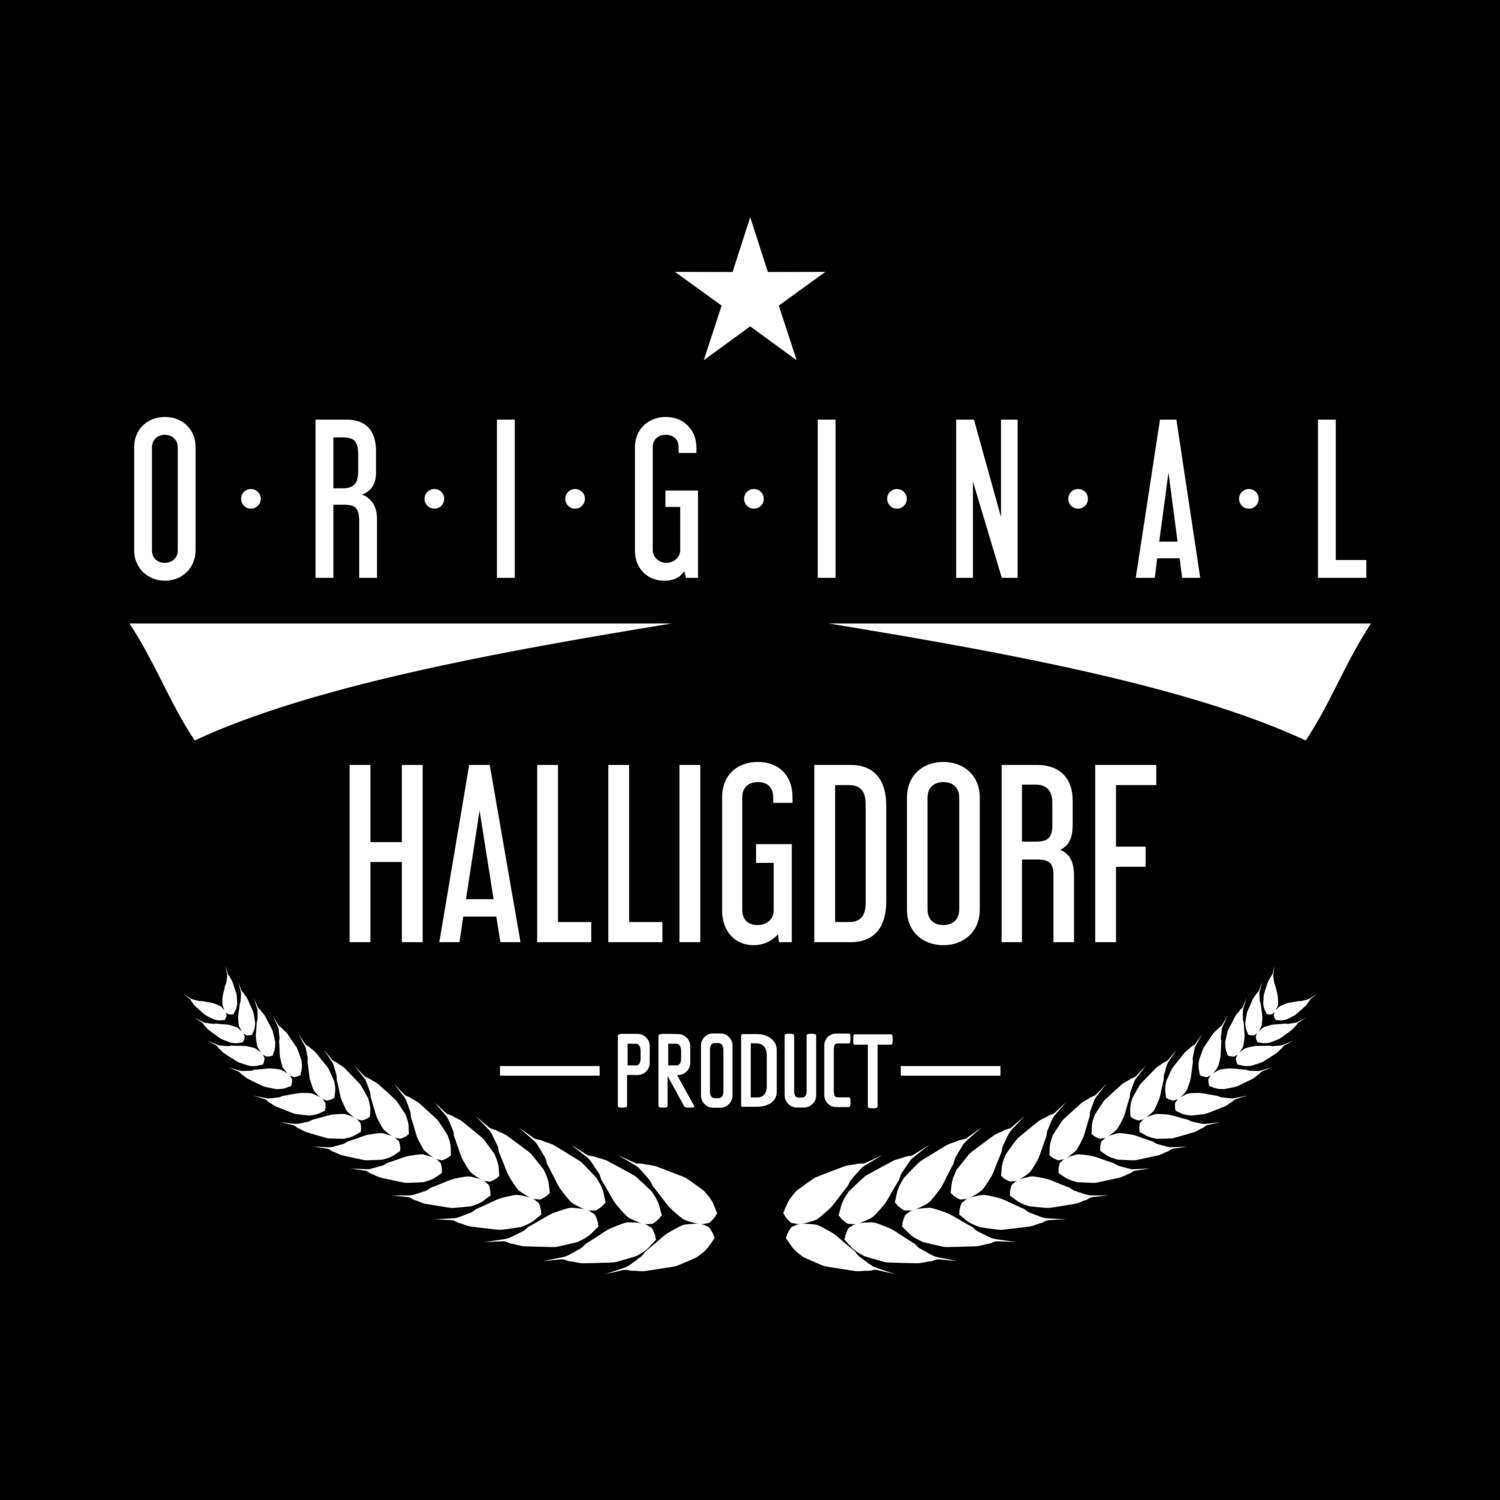 Halligdorf T-Shirt »Original Product«